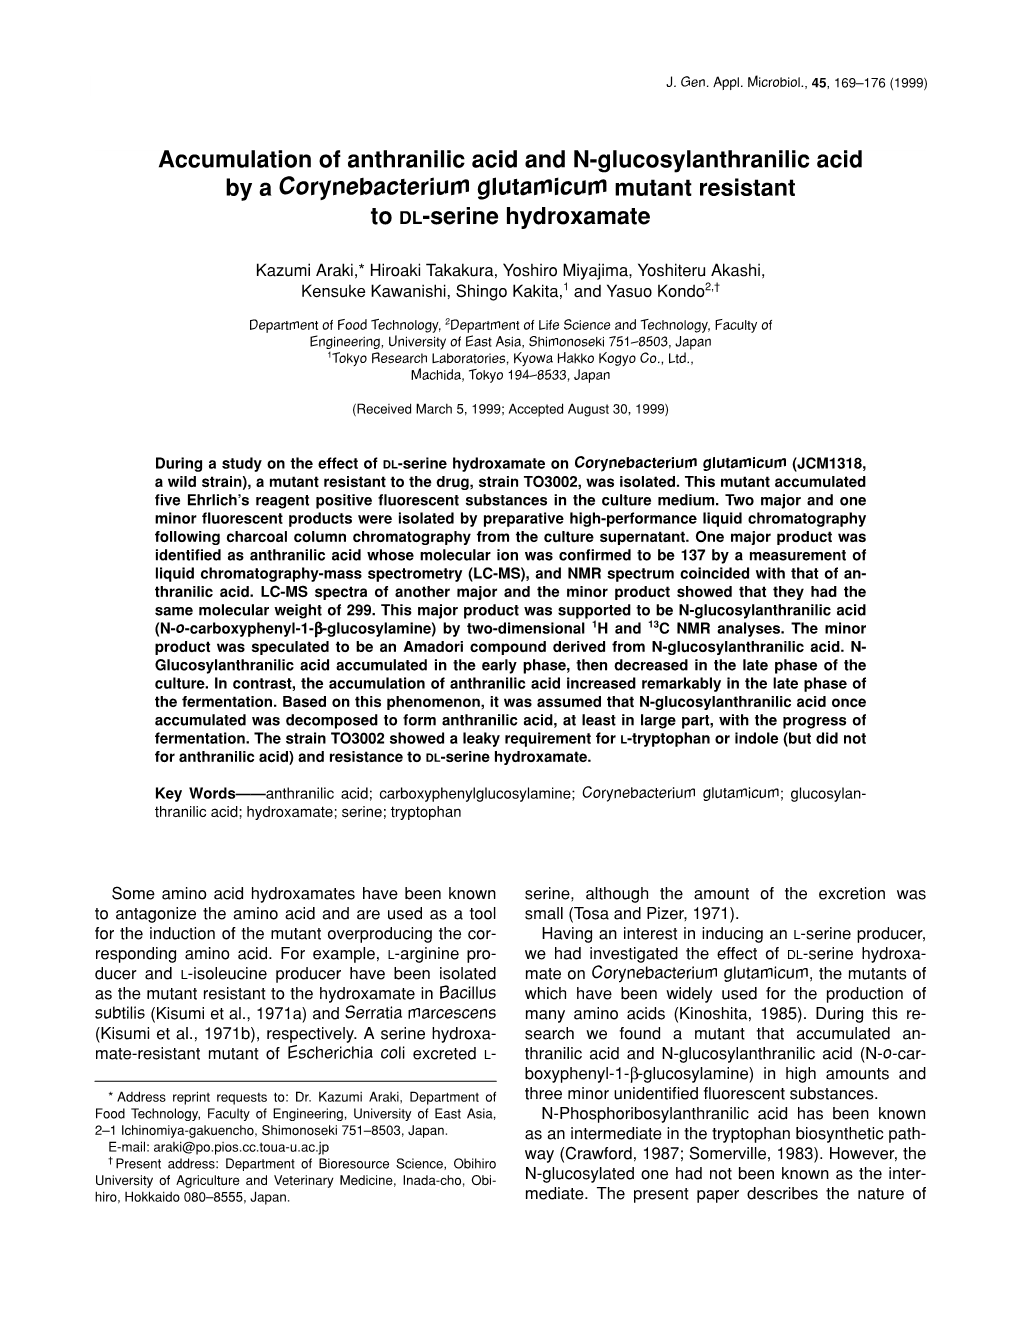 Accumulation of Anthranilic Acid and N-Glucosylanthranilic Acid by a Corynebacterium Glutamicum Mutant Resistant to DL-Serine Hydroxamate